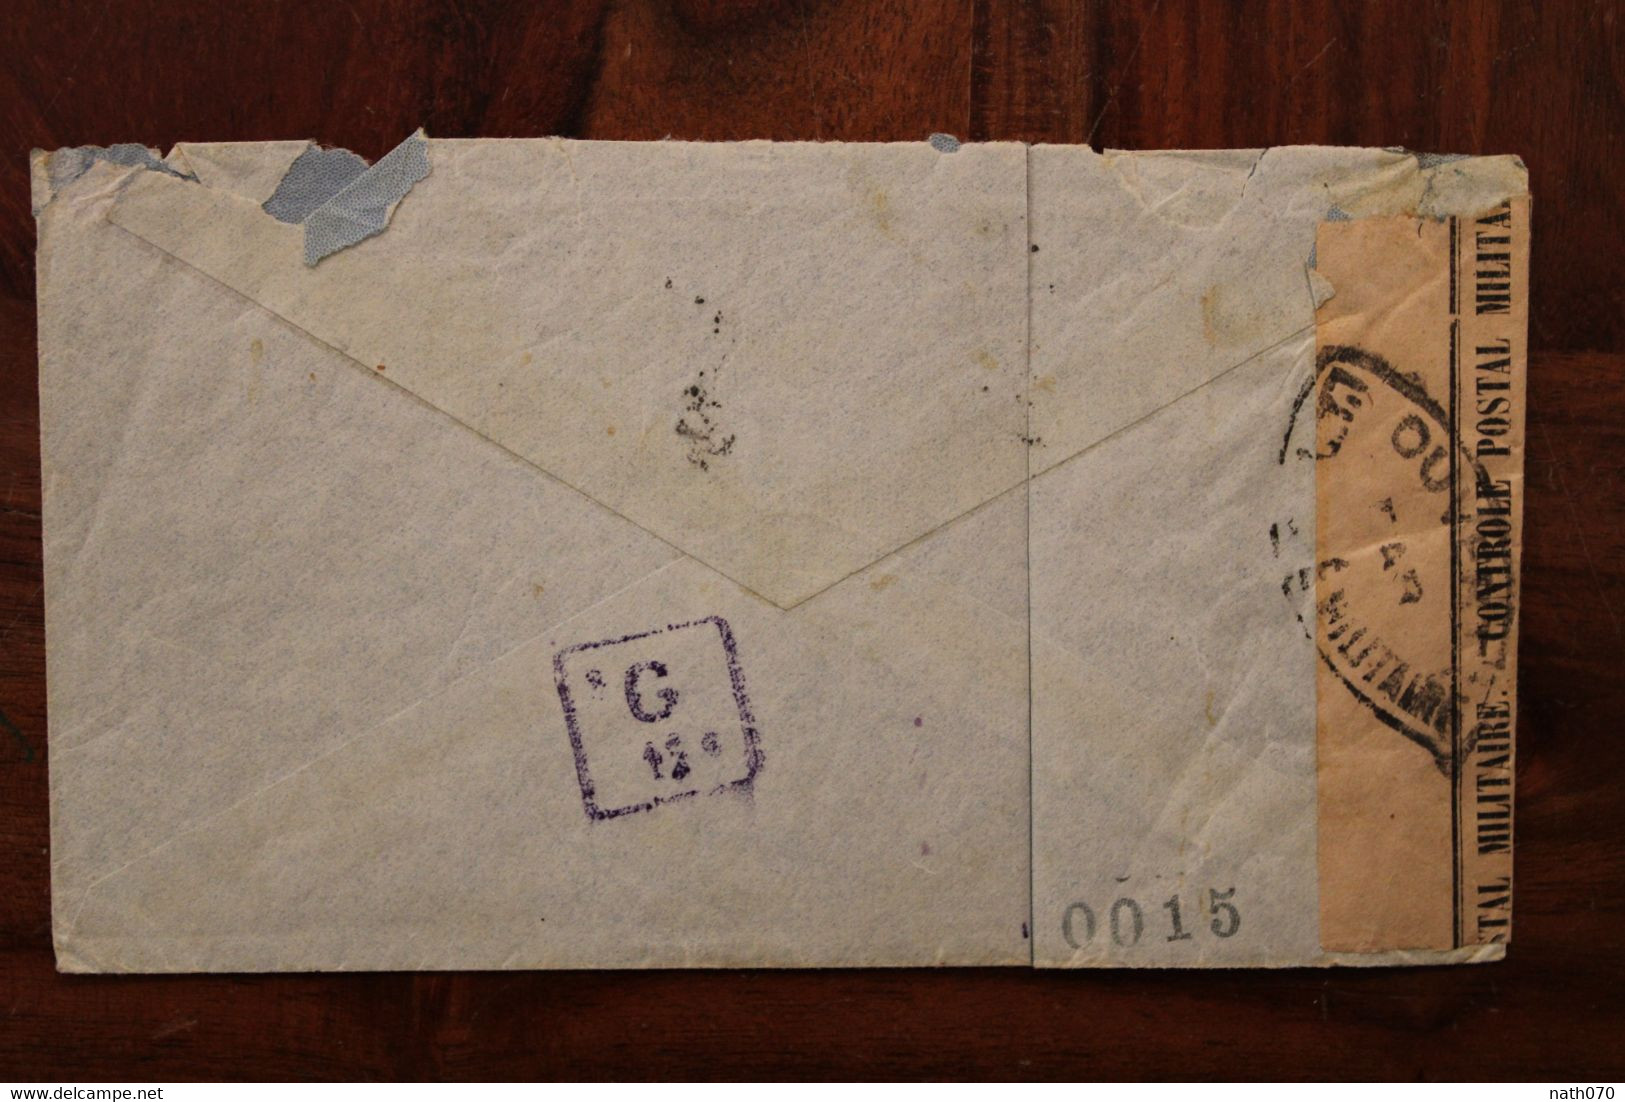 1945 Madagascar Contrôle Postal Censure Poste Aerienne Taxe Perçue Cover Air Mail Commission G12 - Briefe U. Dokumente